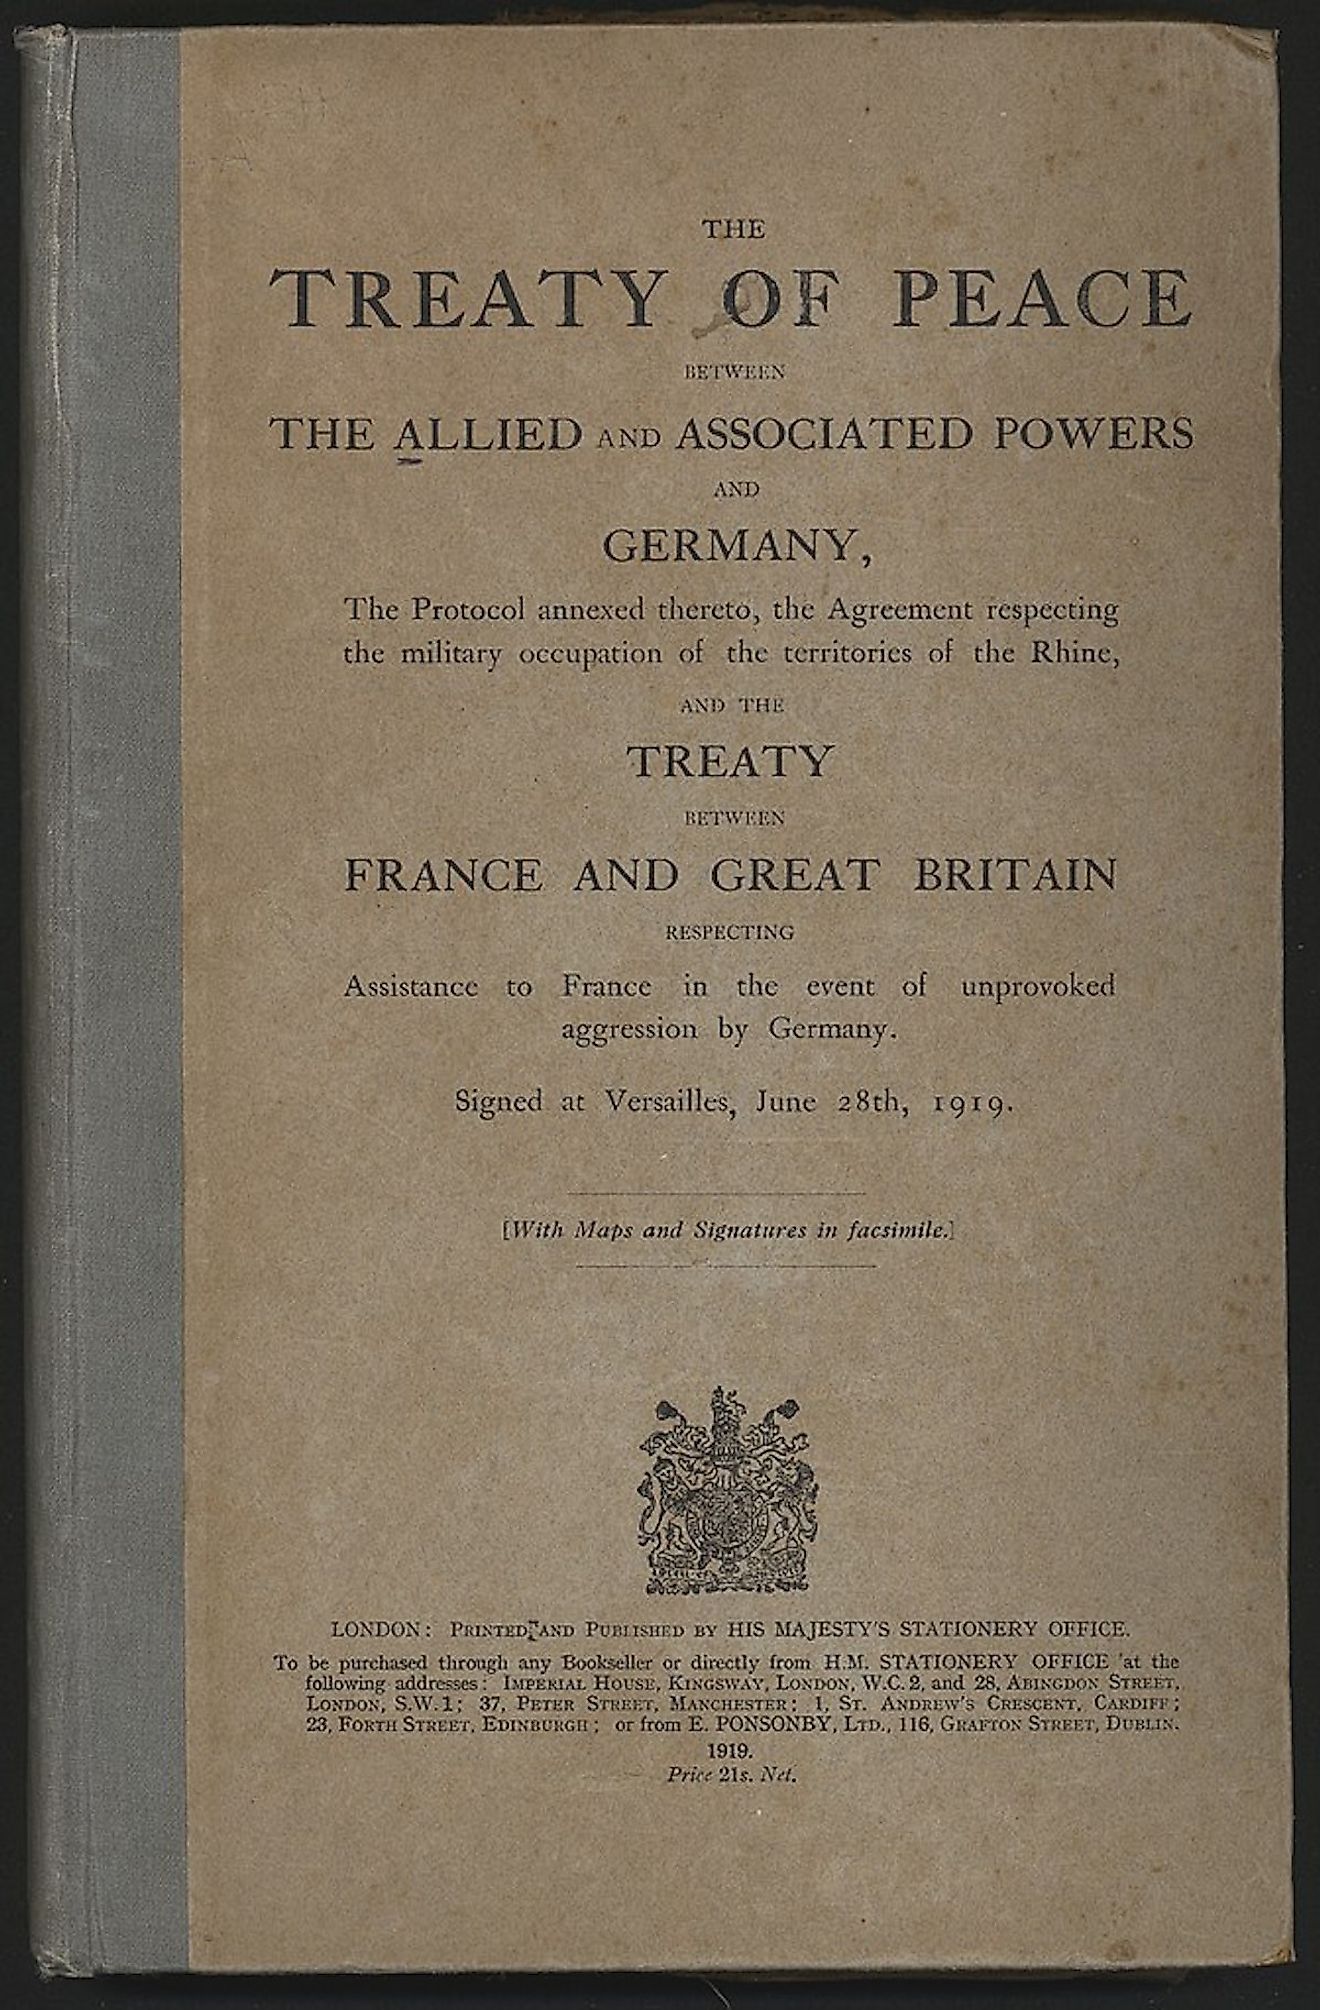 Treaty of Versailles, English version. Image credit: Auckland War Memorial Museum/Public domain